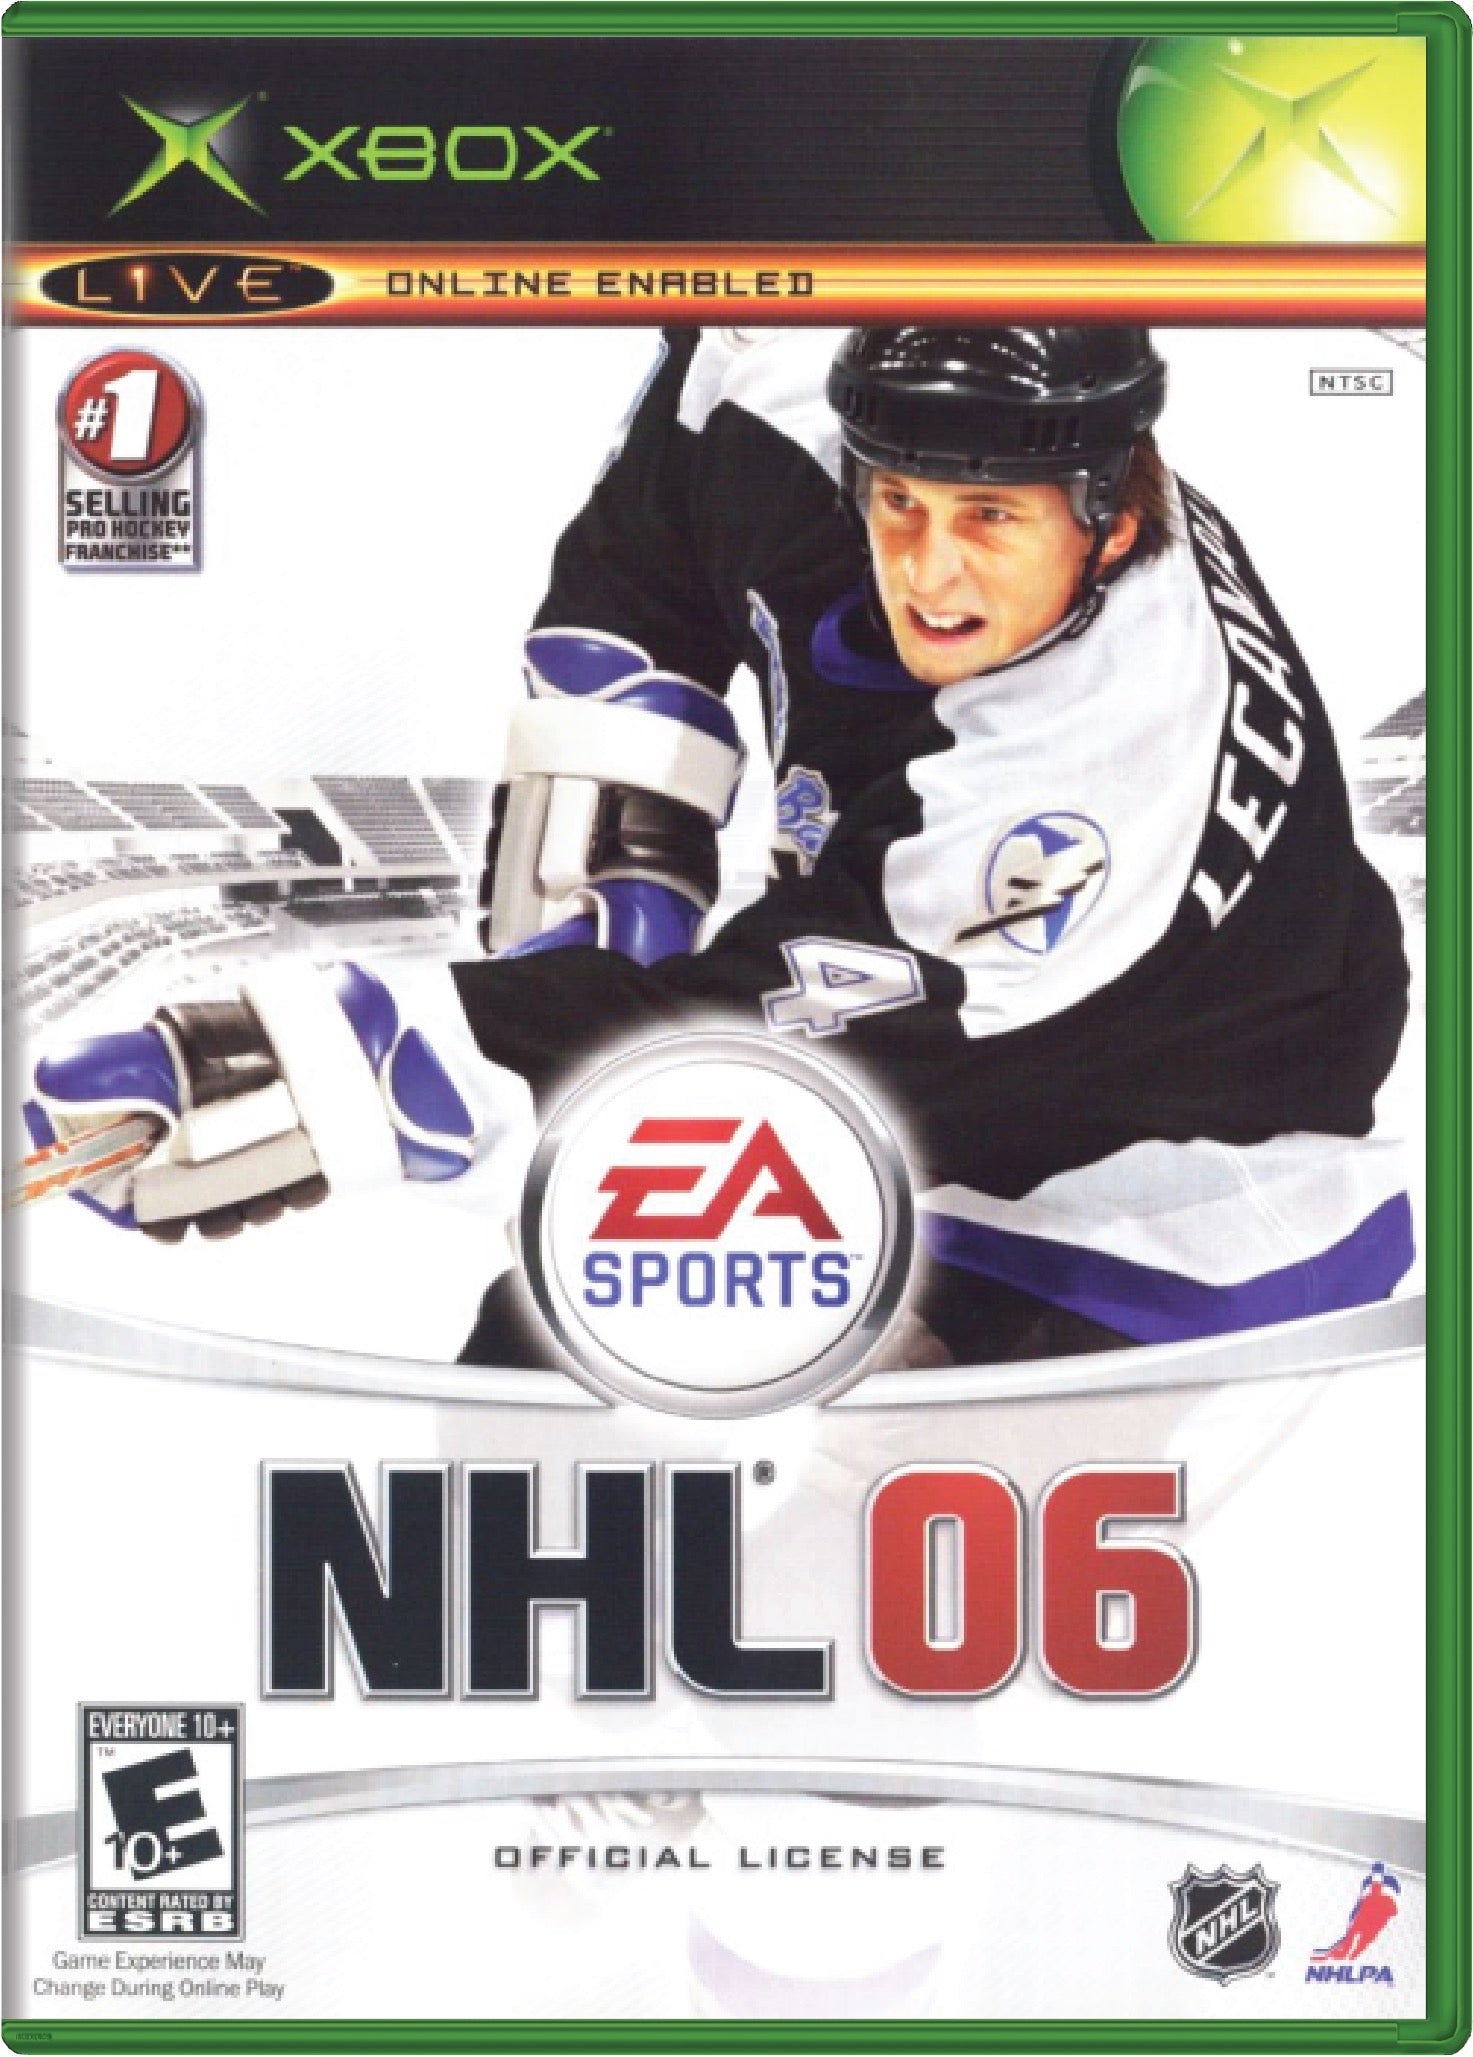 NHL 06 Cover Art